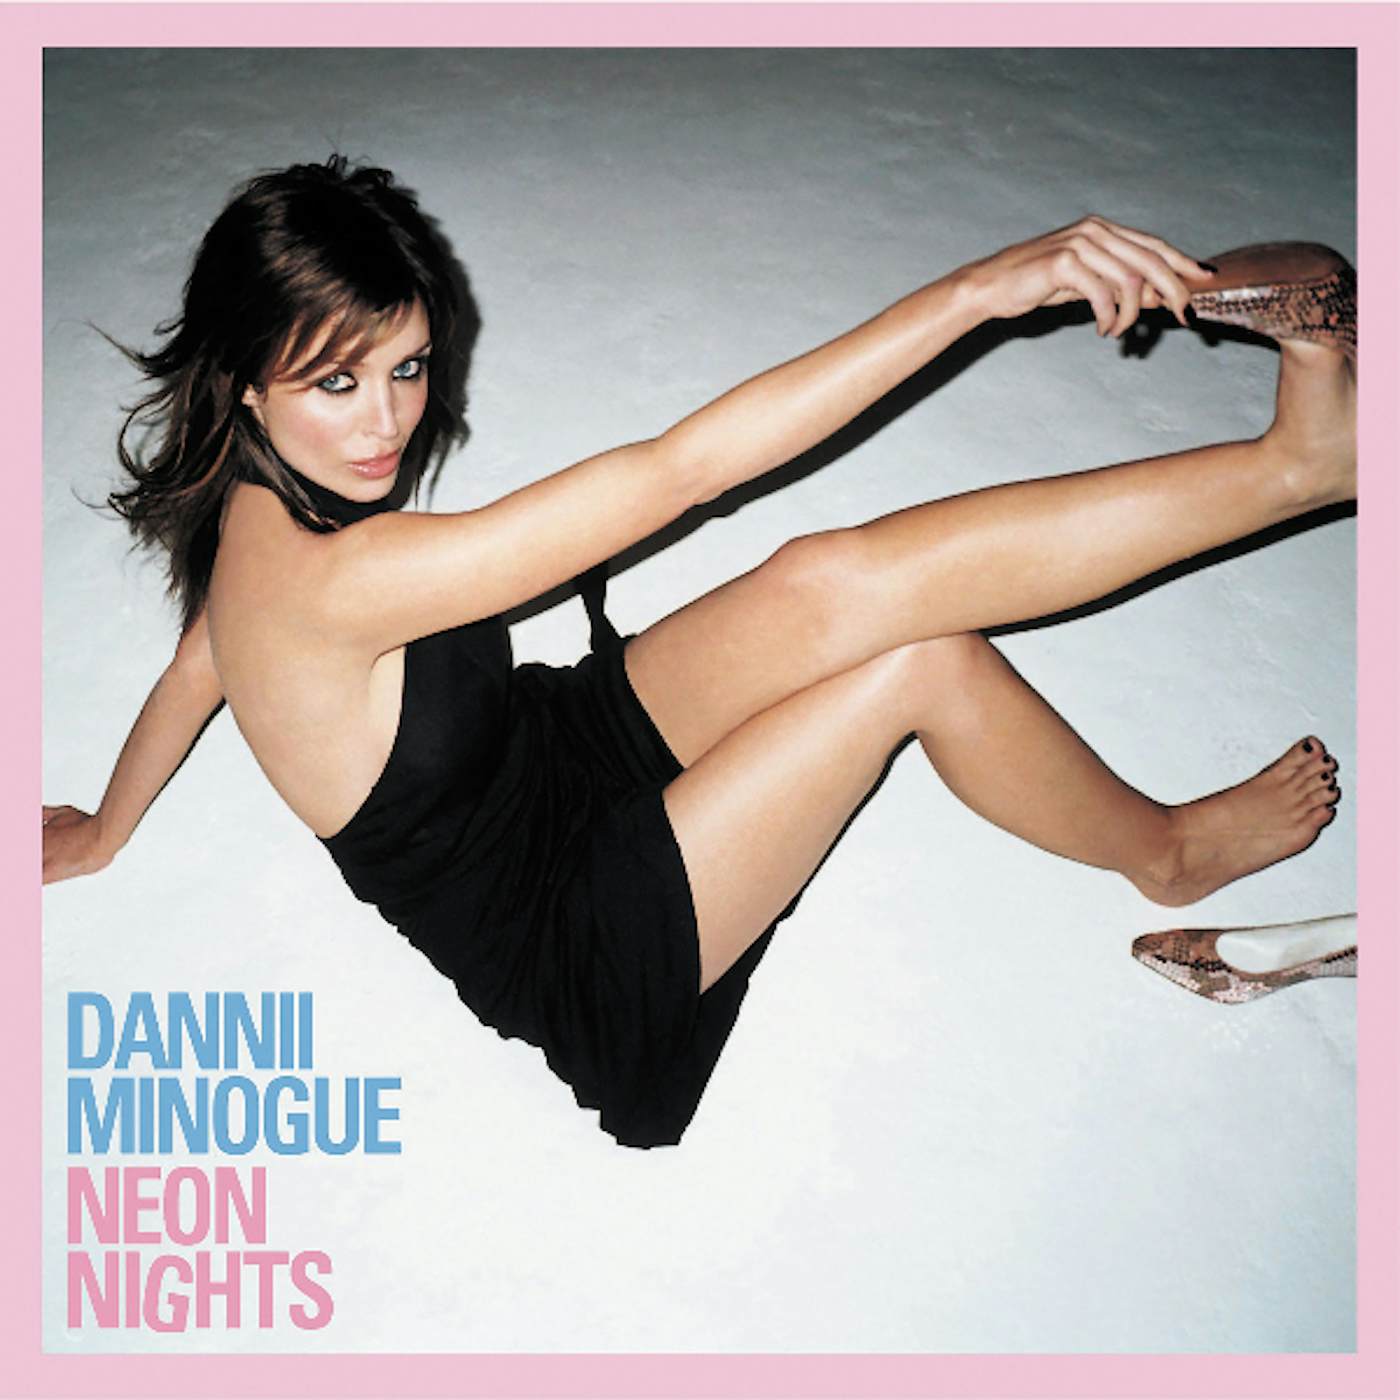 Dannii Minogue Neon Nights Vinyl Record